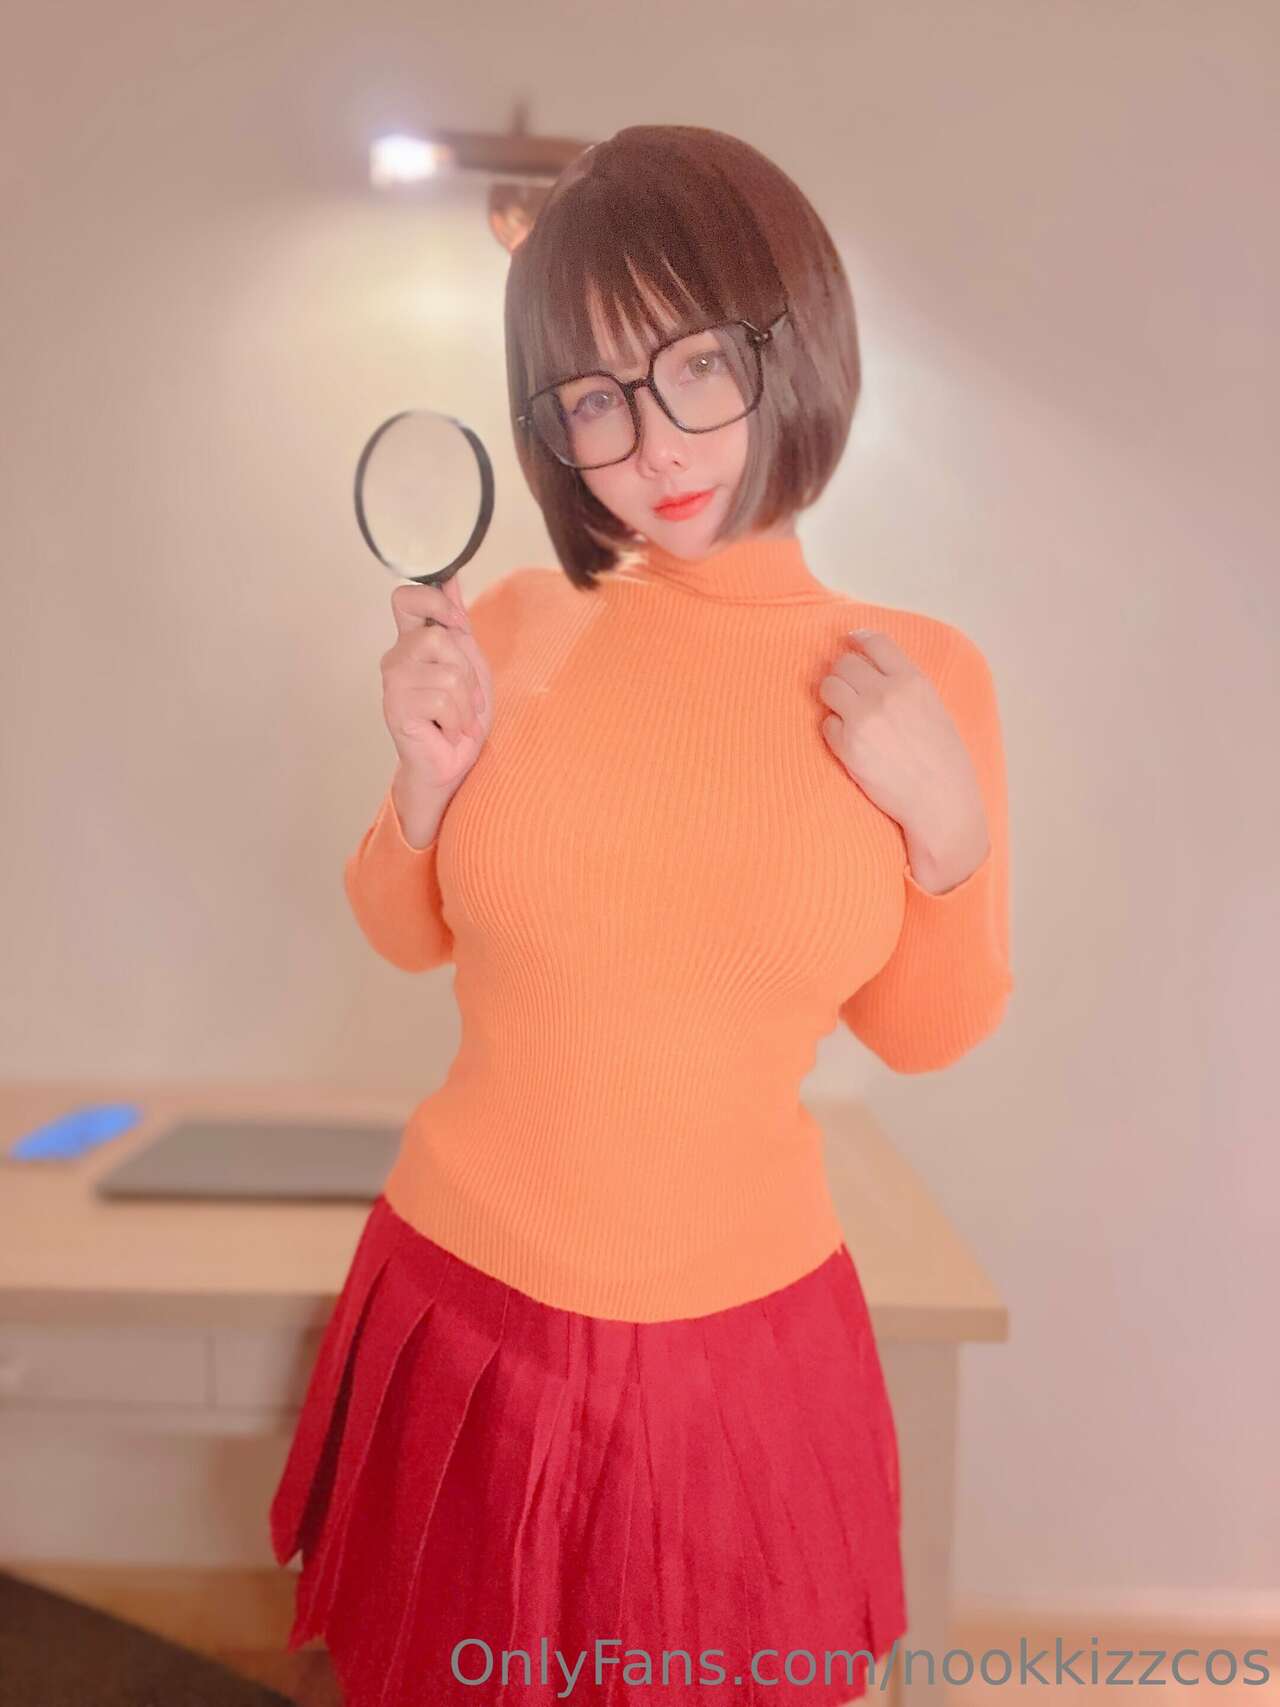 Nookkiizz – Velma